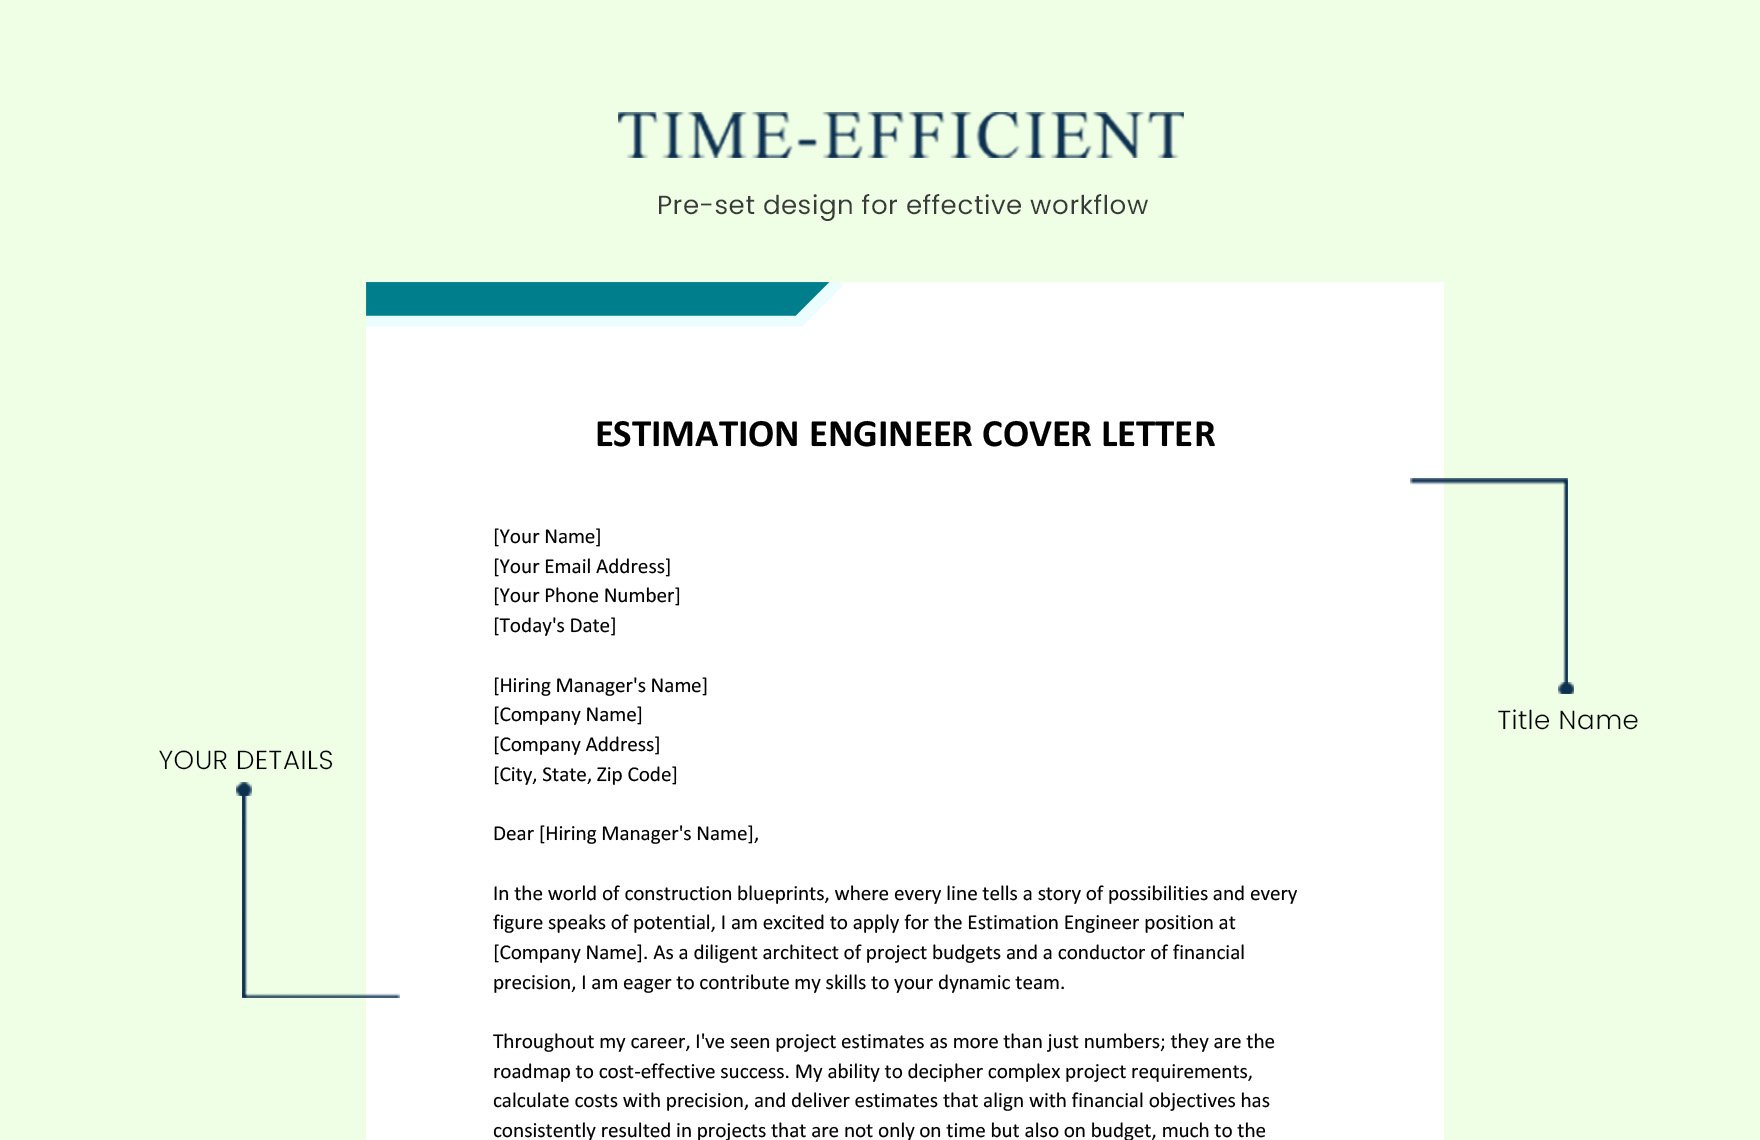 Estimation Engineer Cover Letter